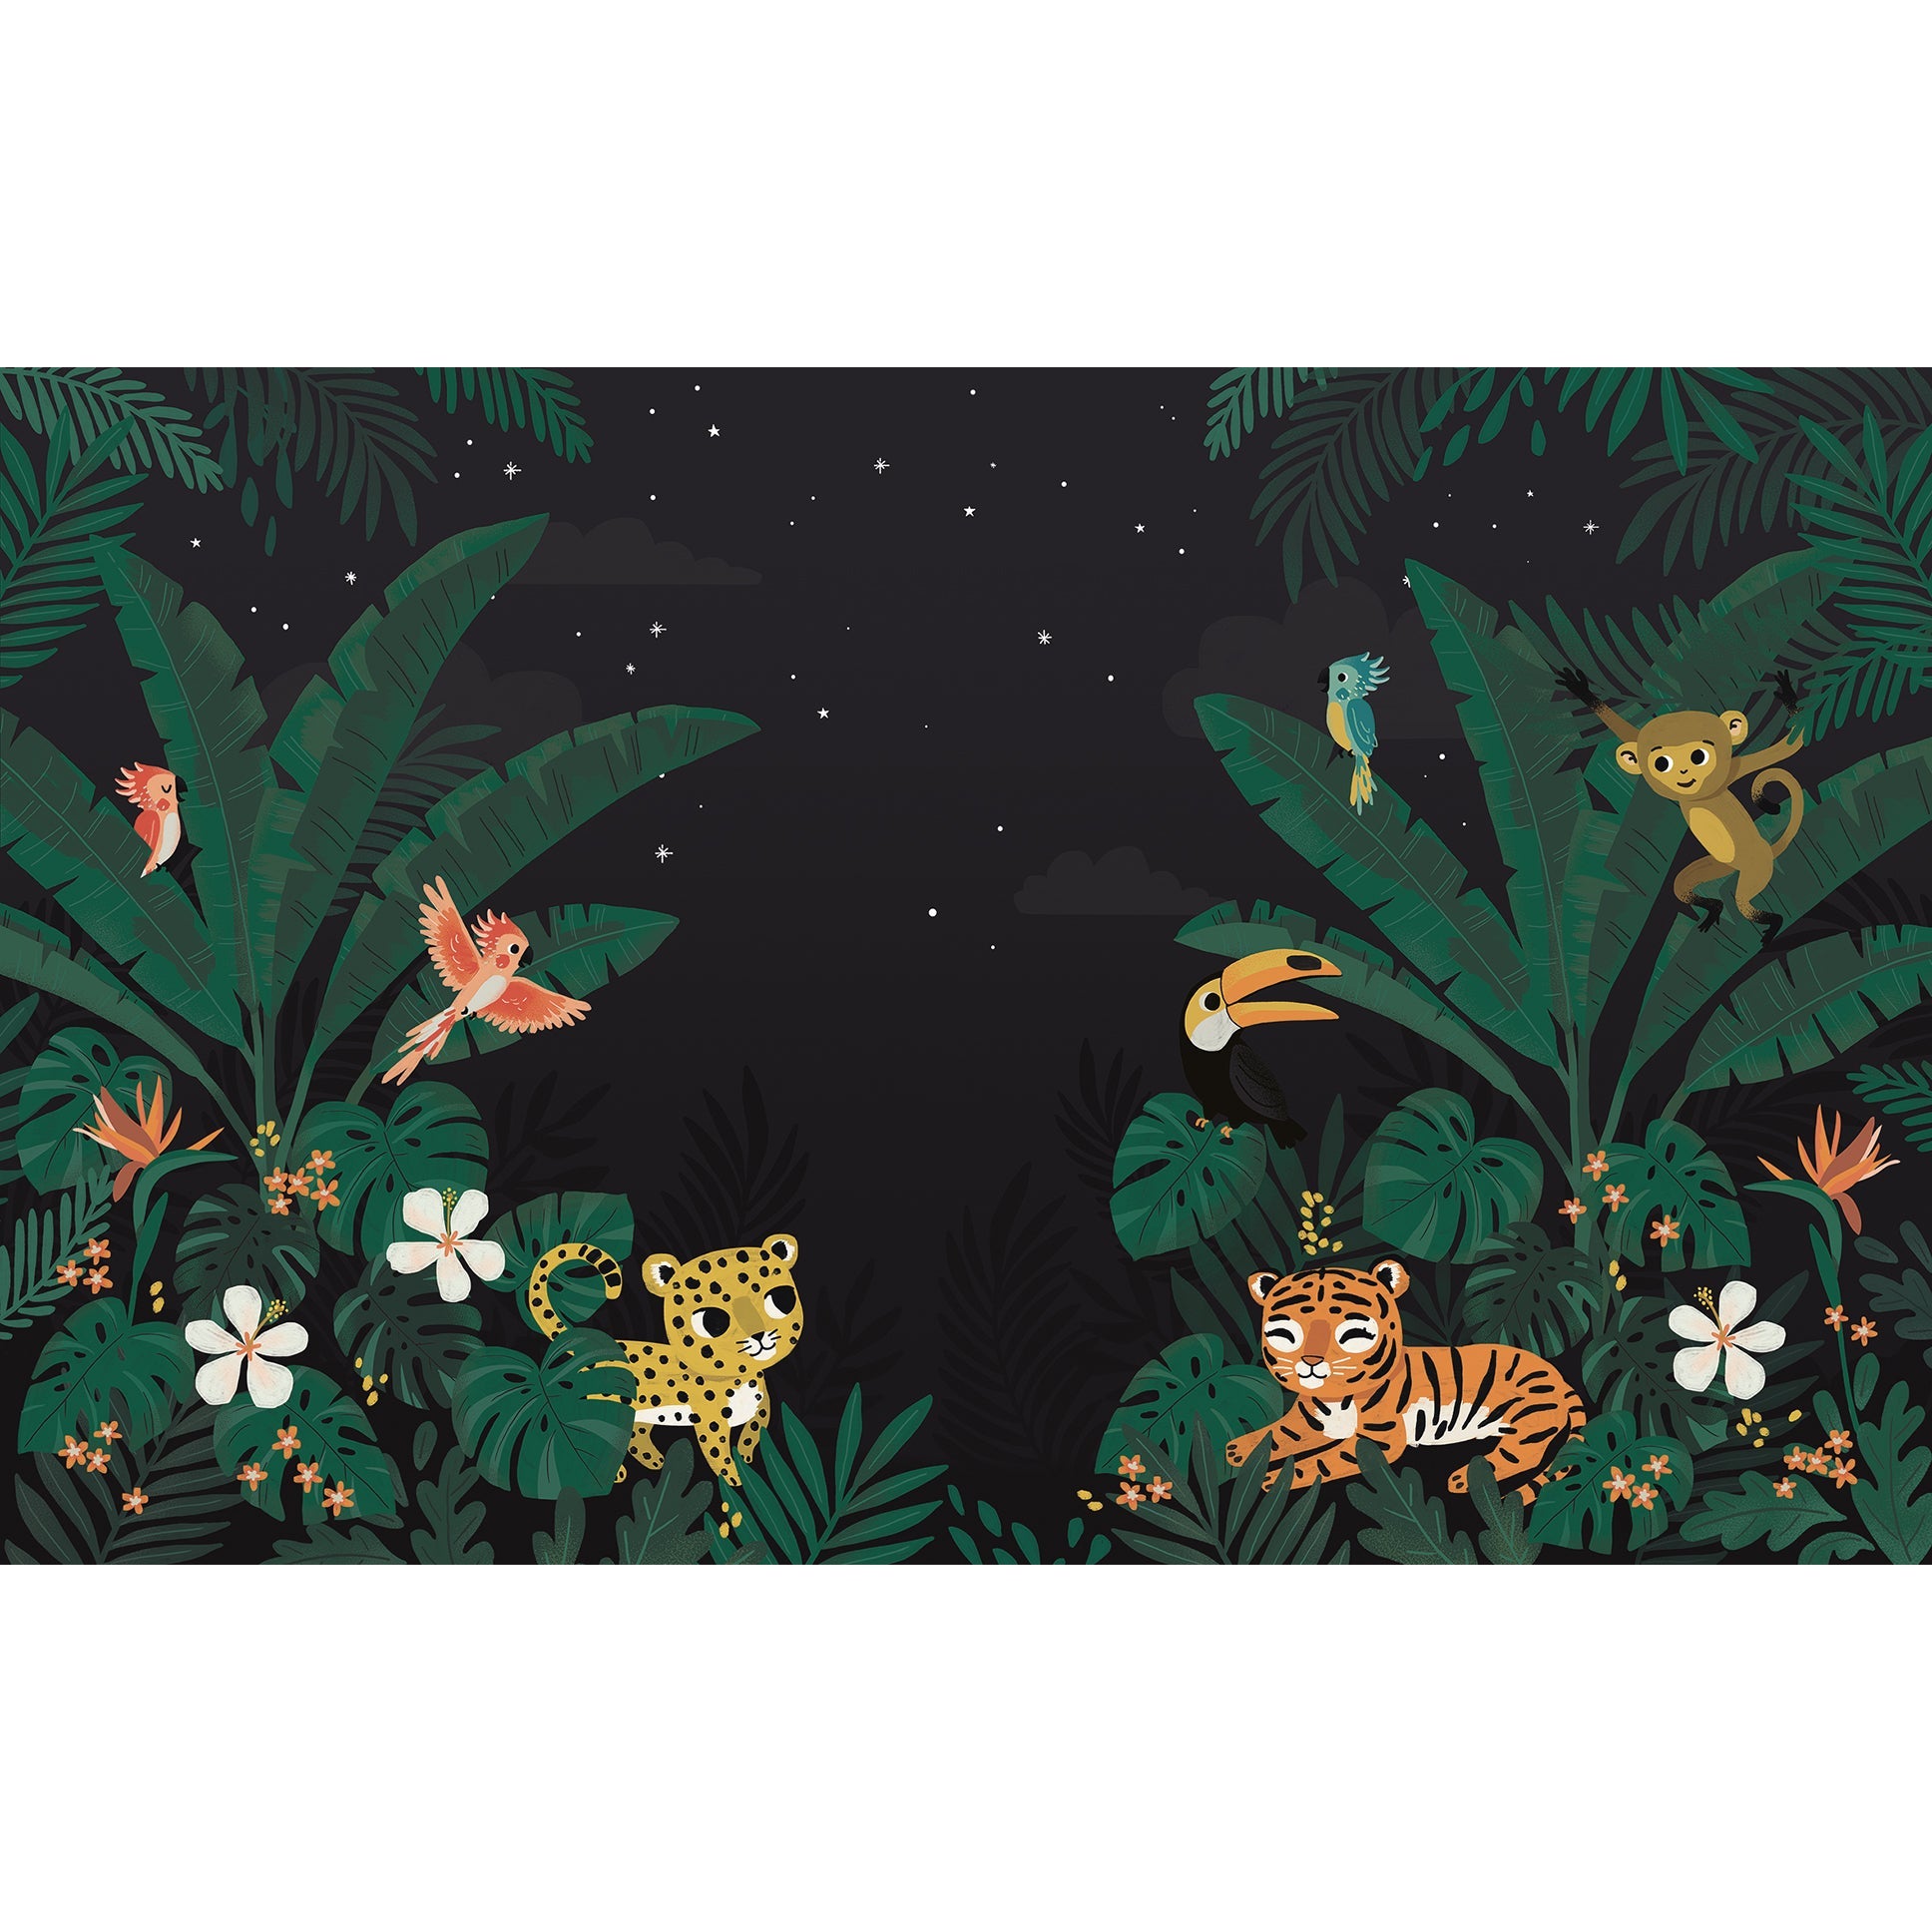 Lilipinso Wallpaper Mural - Jungle Night